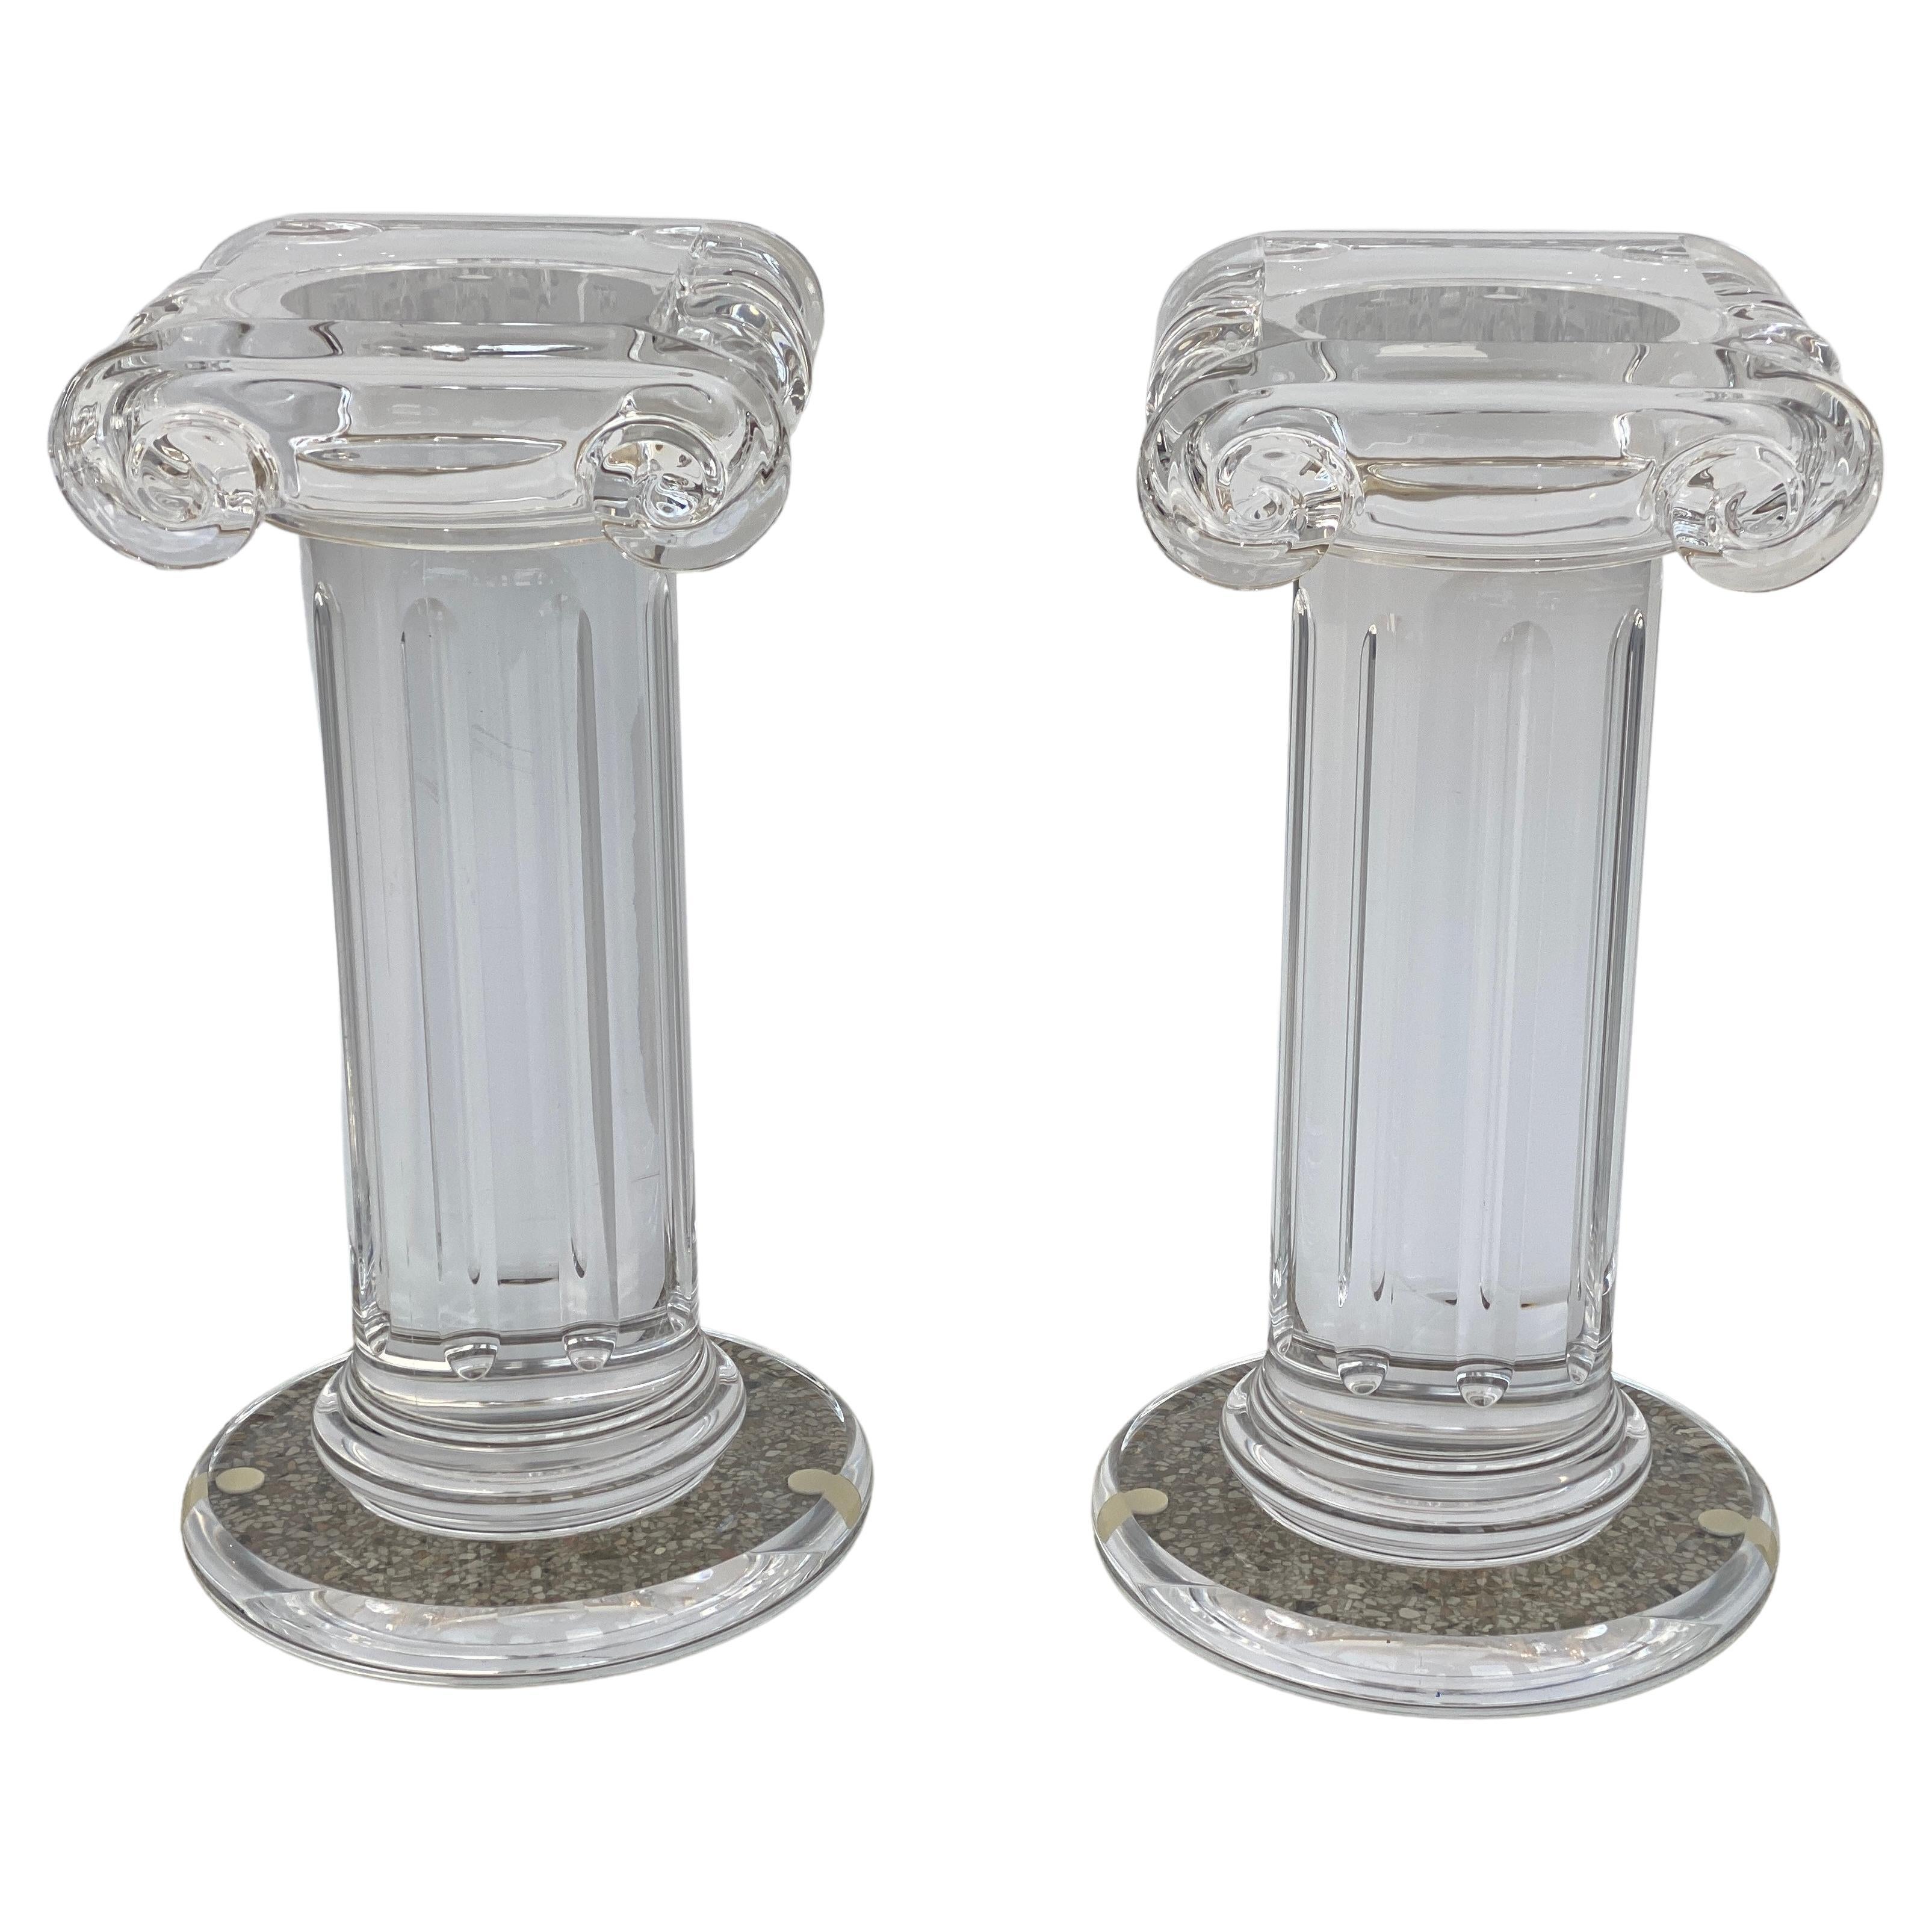 Pair of Classical Style Lucite Pedestals